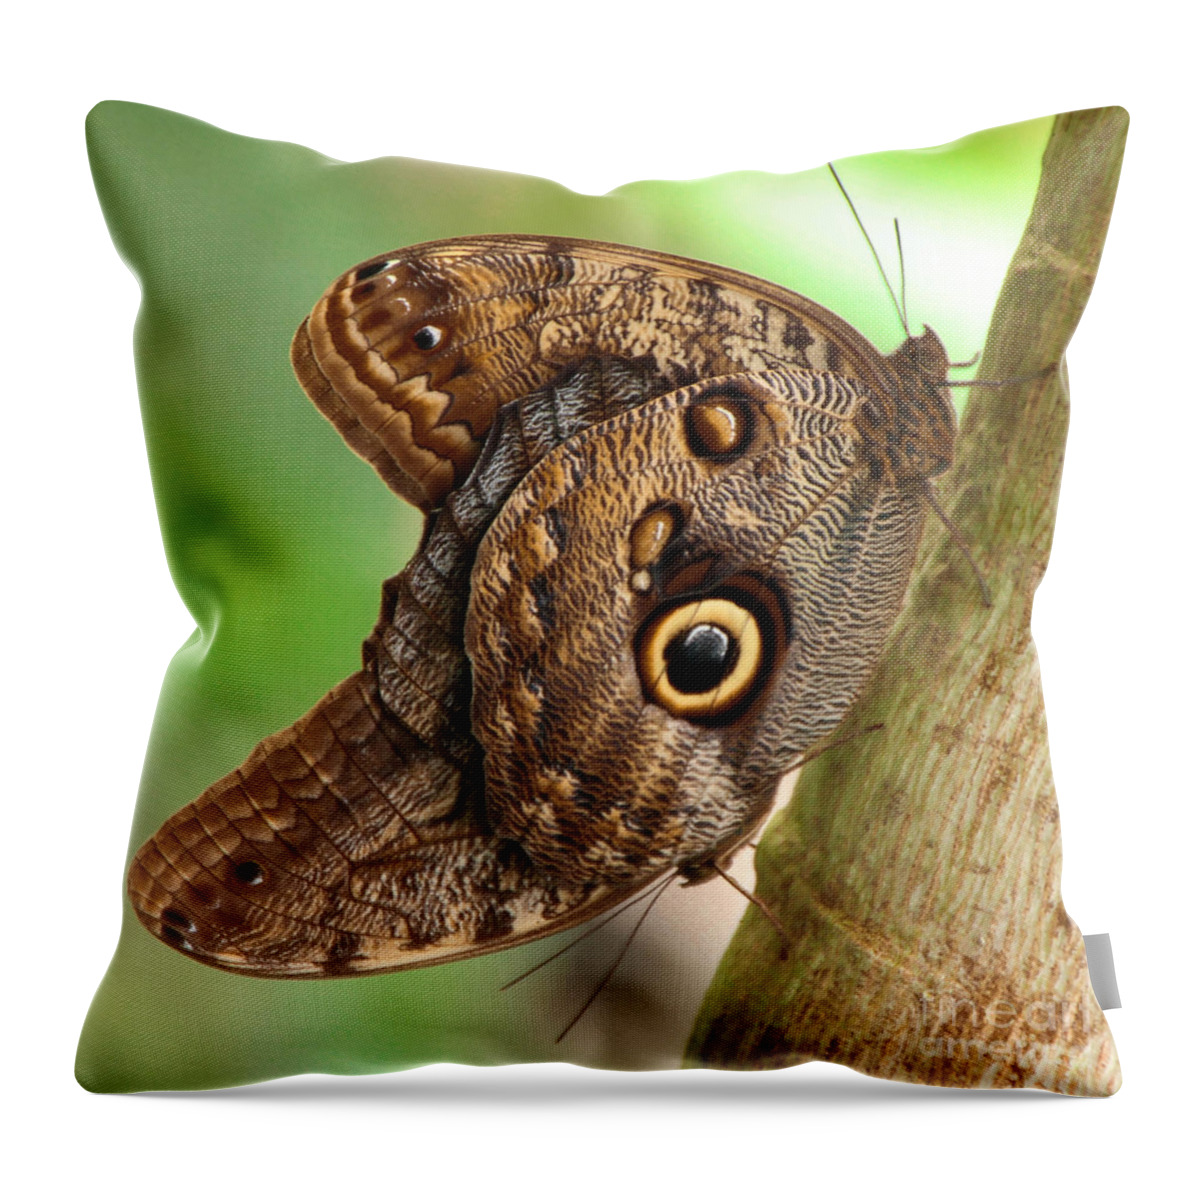 Caligo Throw Pillow featuring the photograph Two Caligo Atreus Butterflies by Amanda Mohler